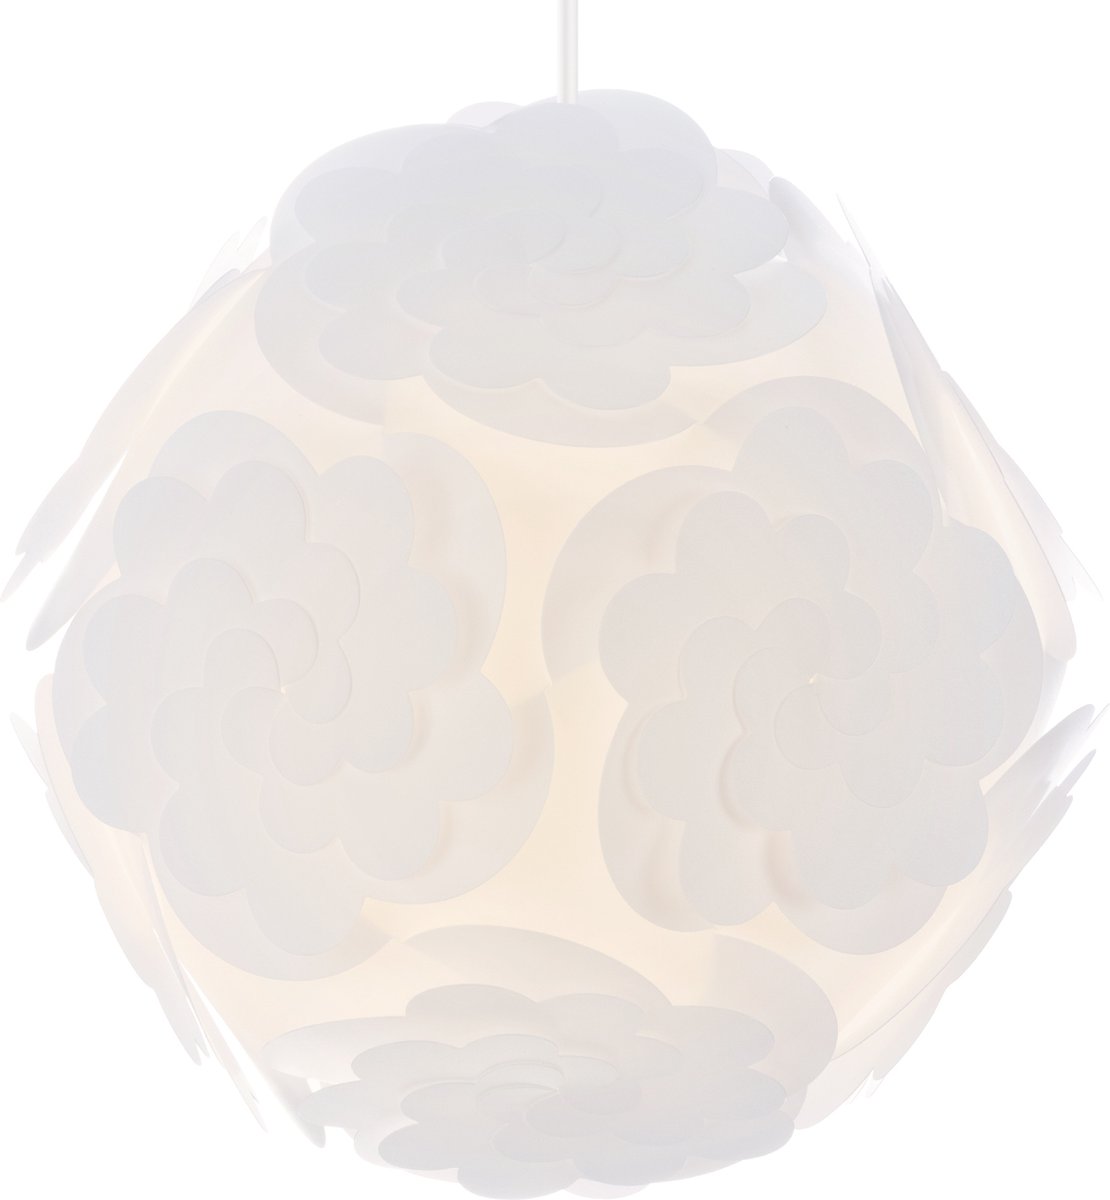 kwmobile puzzel lampenkap bloesem design - 26 cm diameter DHZ plafondlamp lampenkap - Voor hanglampen plafonds - Maat M, wit